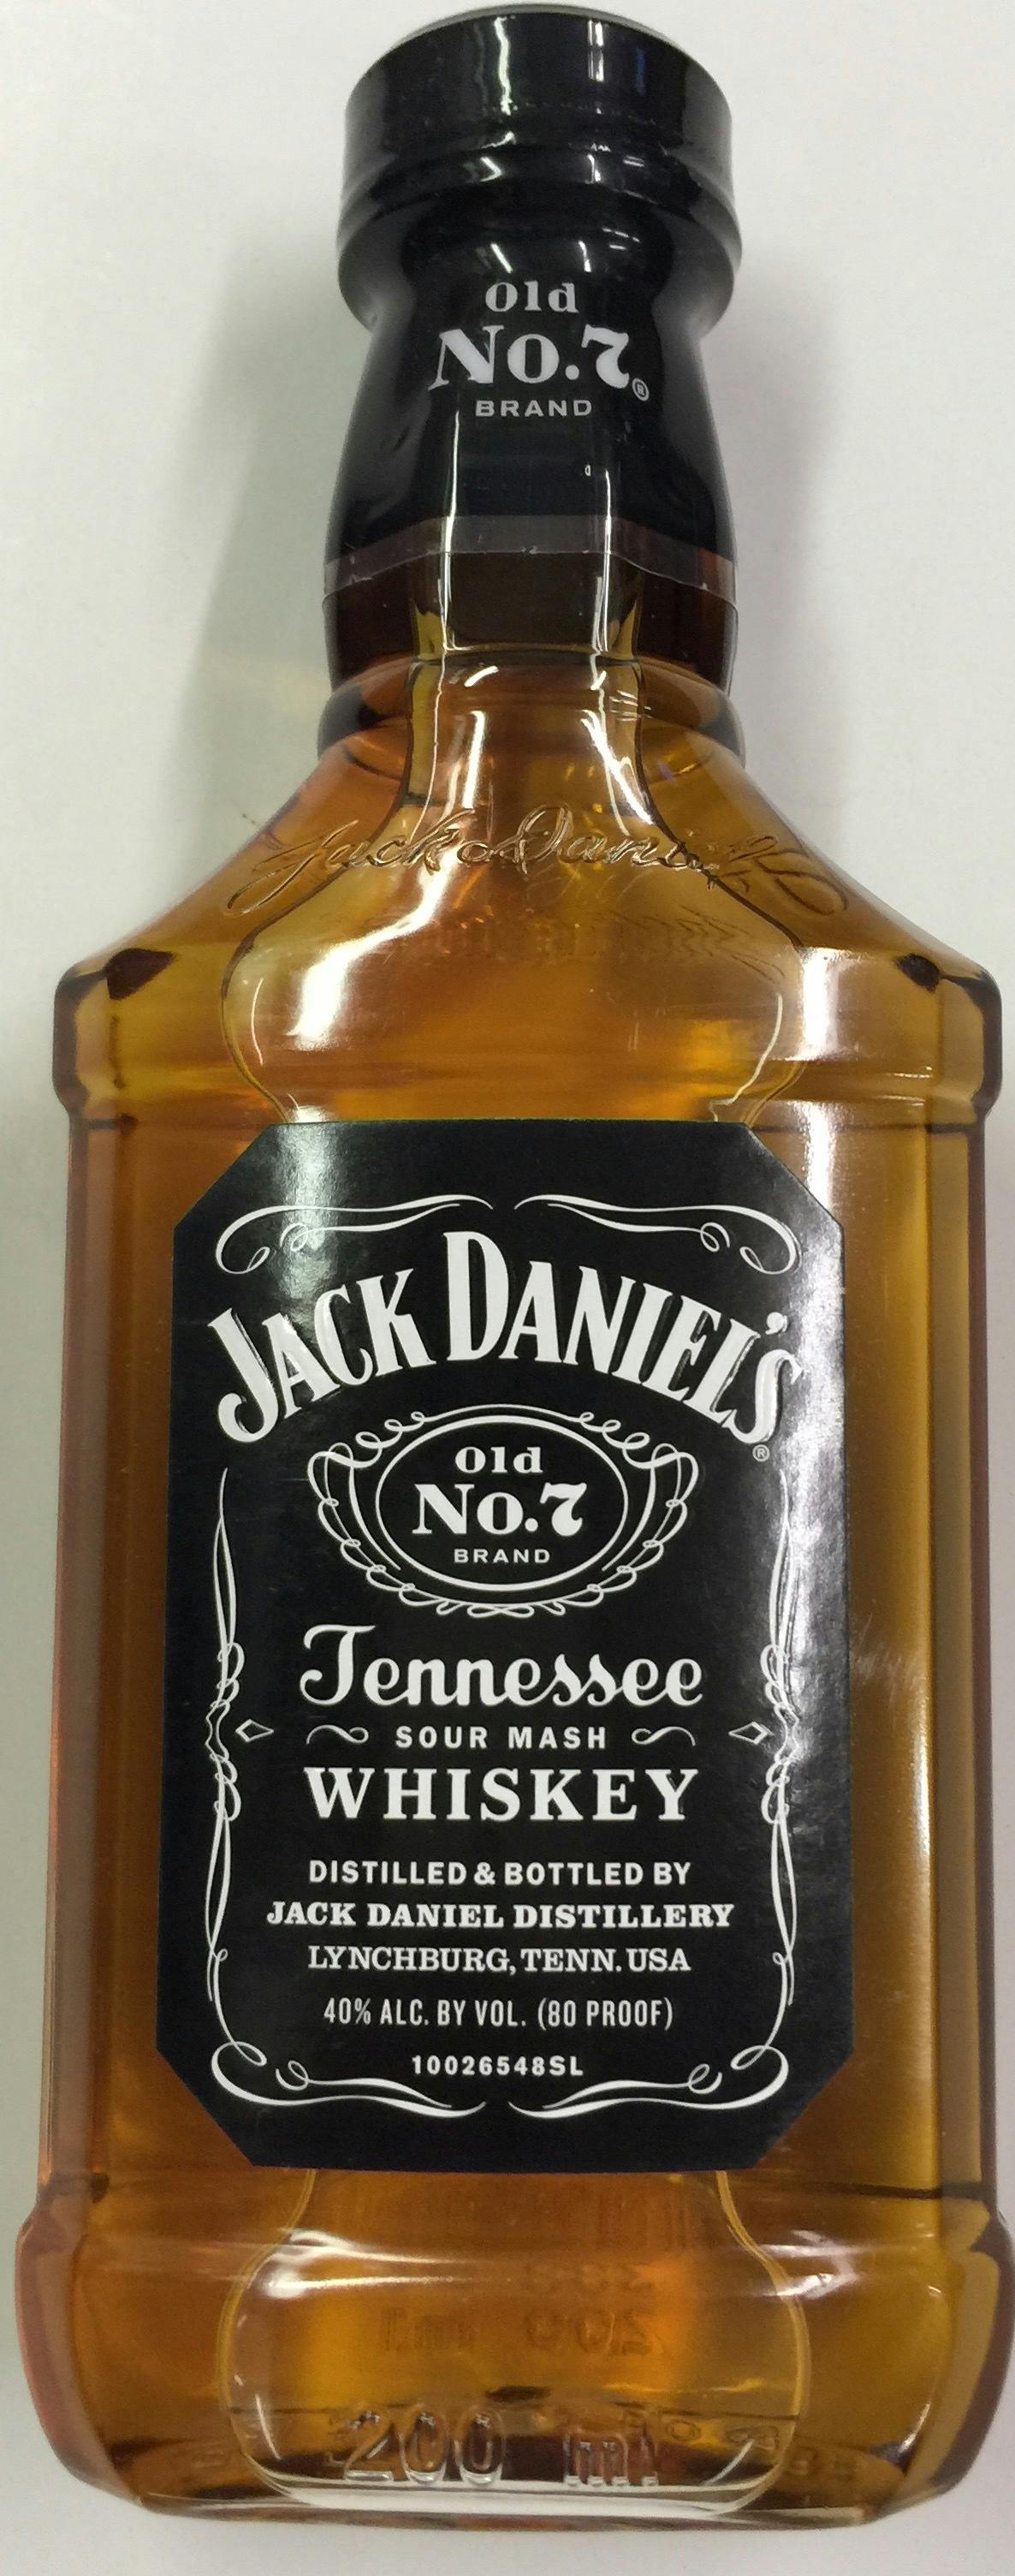 Jack Daniel's Black Label Old No.7 Brand Sour Mash Whiskey 375mL